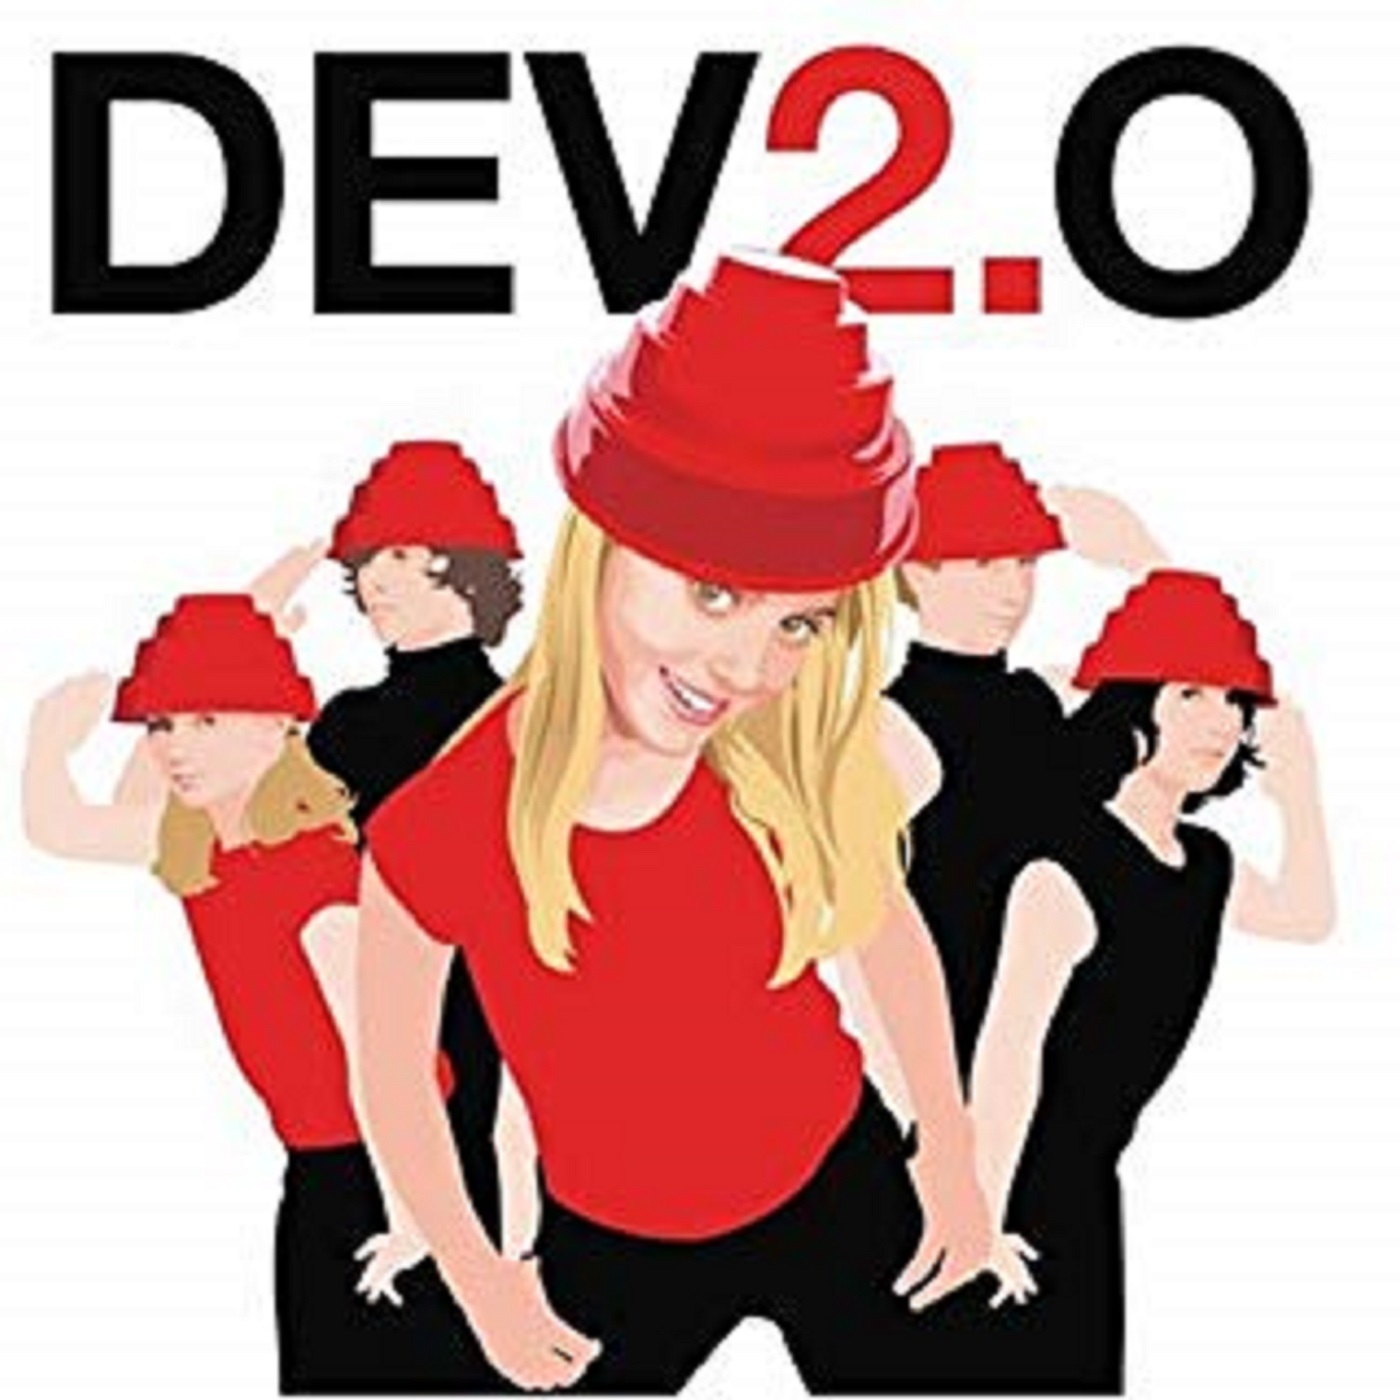 Devo’s “Dev2.0” (with Bonnie Finley and Richard Taylor)